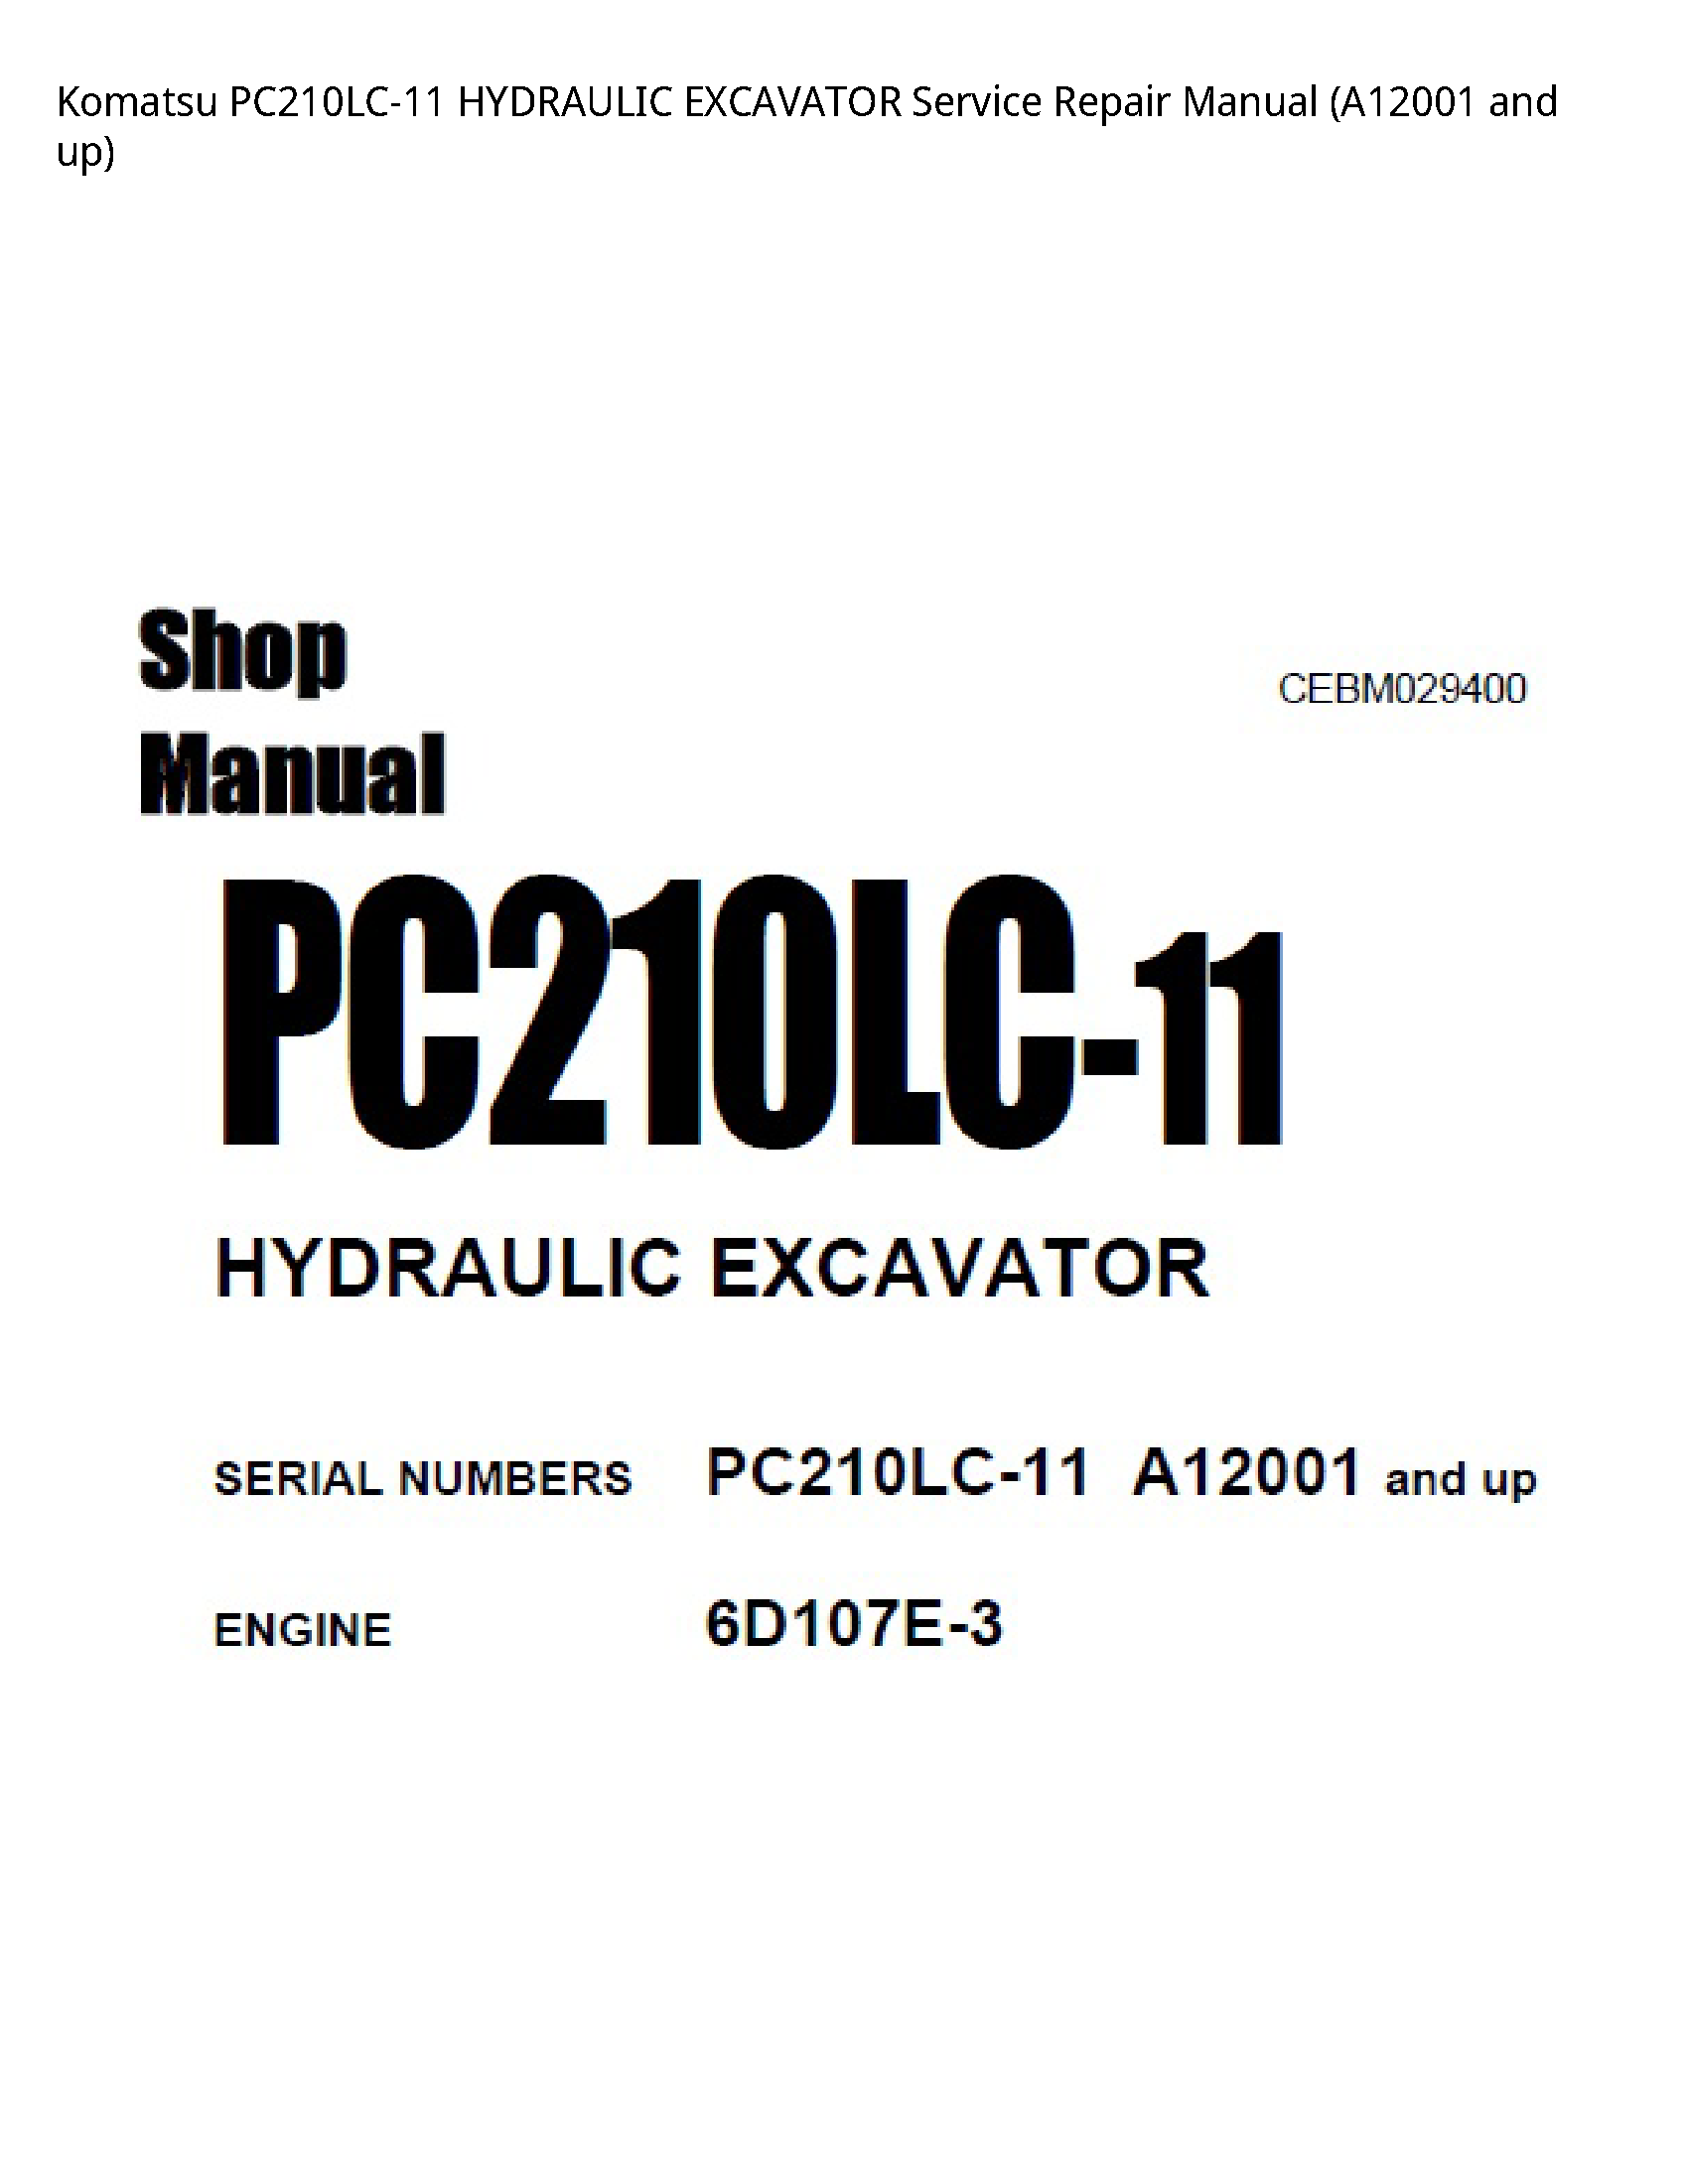 KOMATSU PC210LC-11 HYDRAULIC EXCAVATOR manual